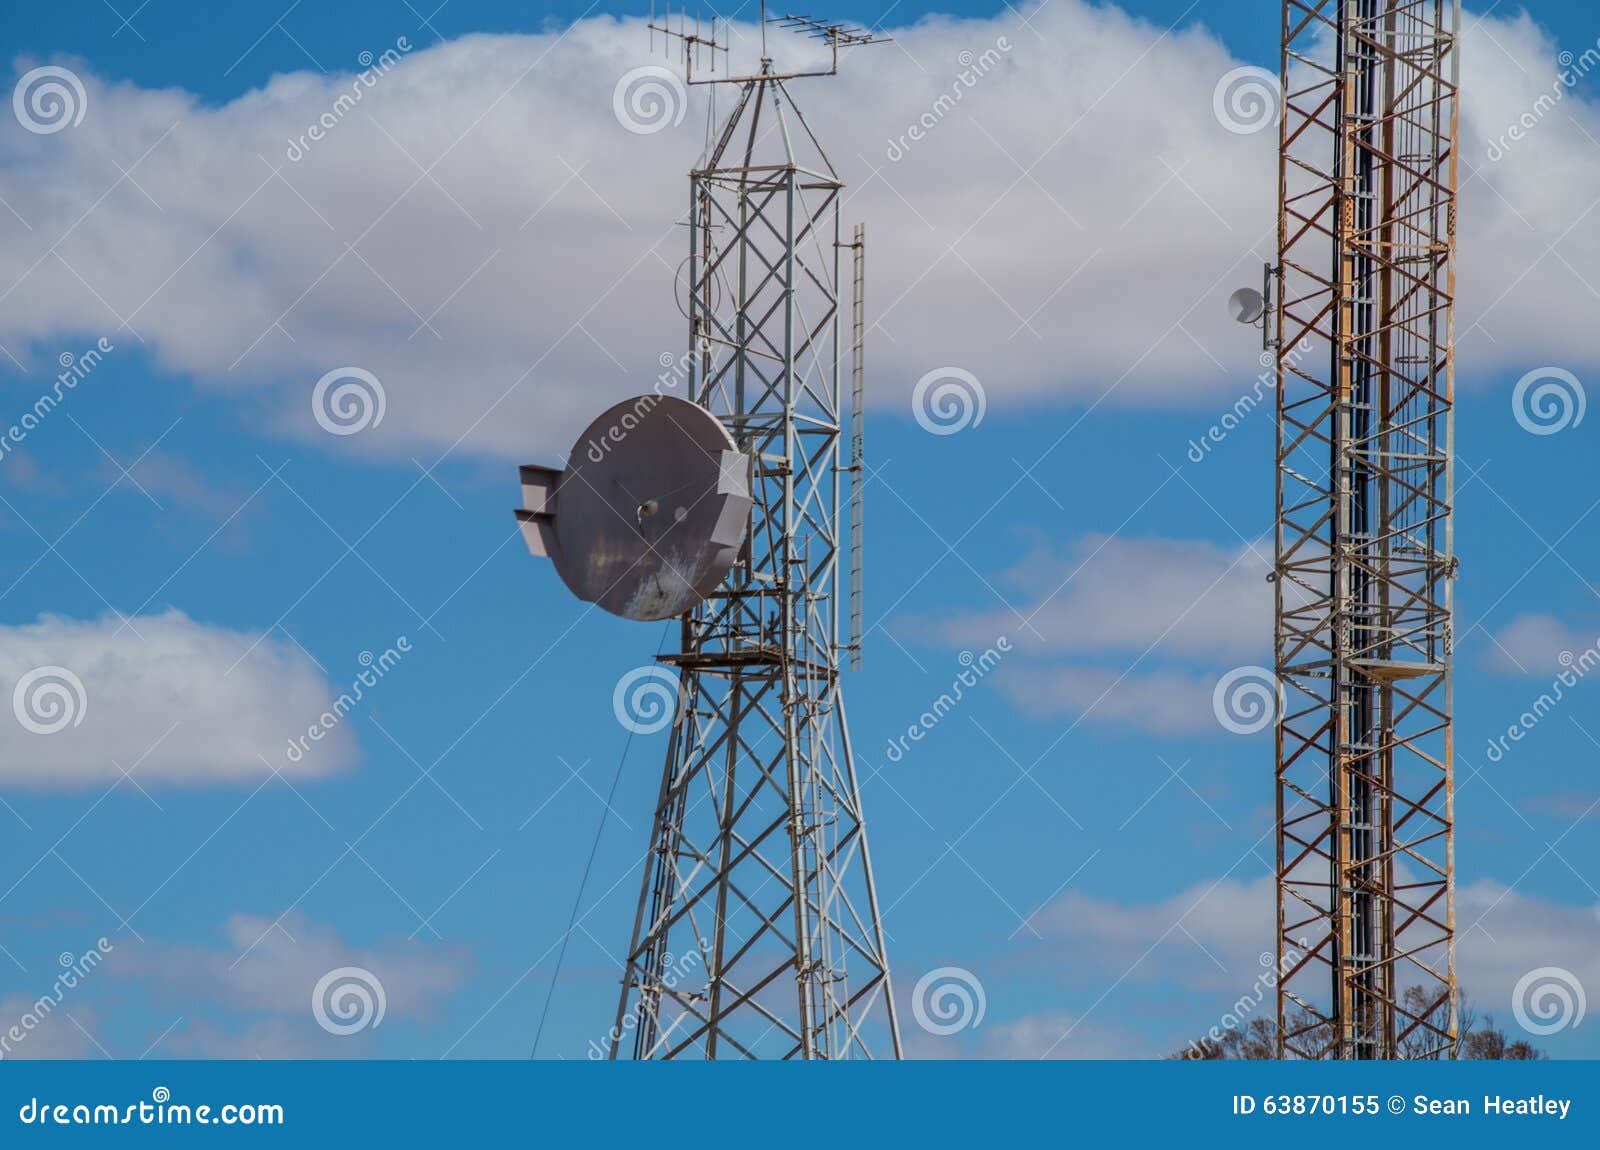 comunication towers